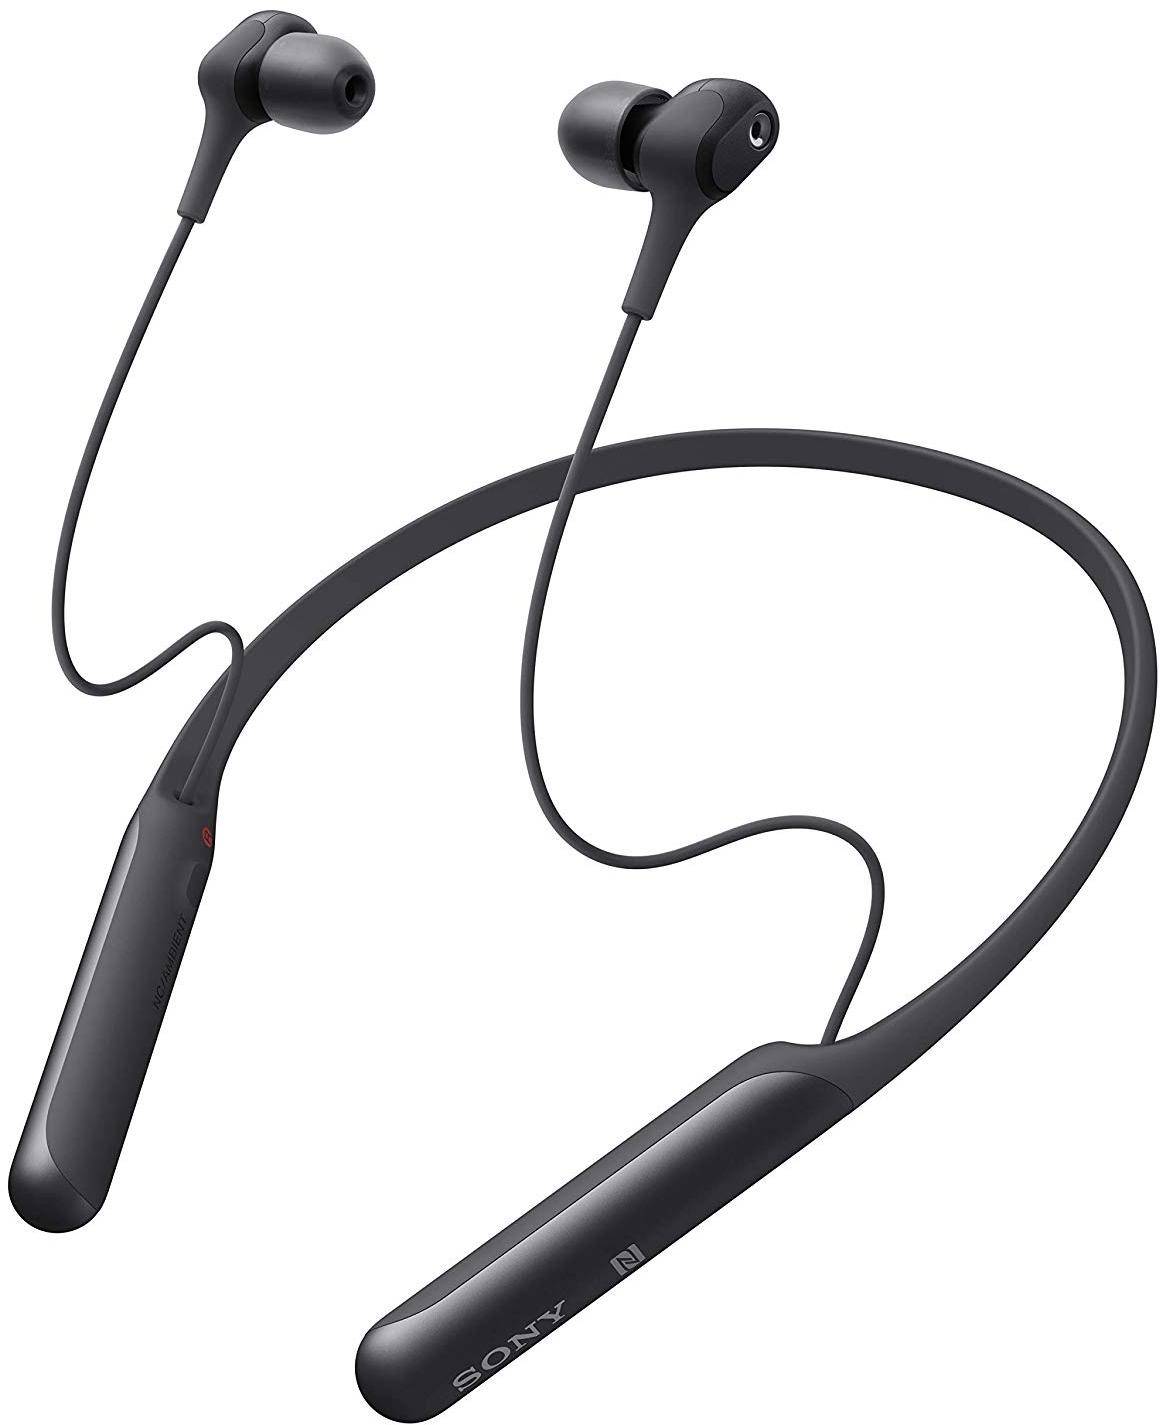 Sony WI-C600N Wireless Noise-Cancelling In-Ear Headphones zoom image